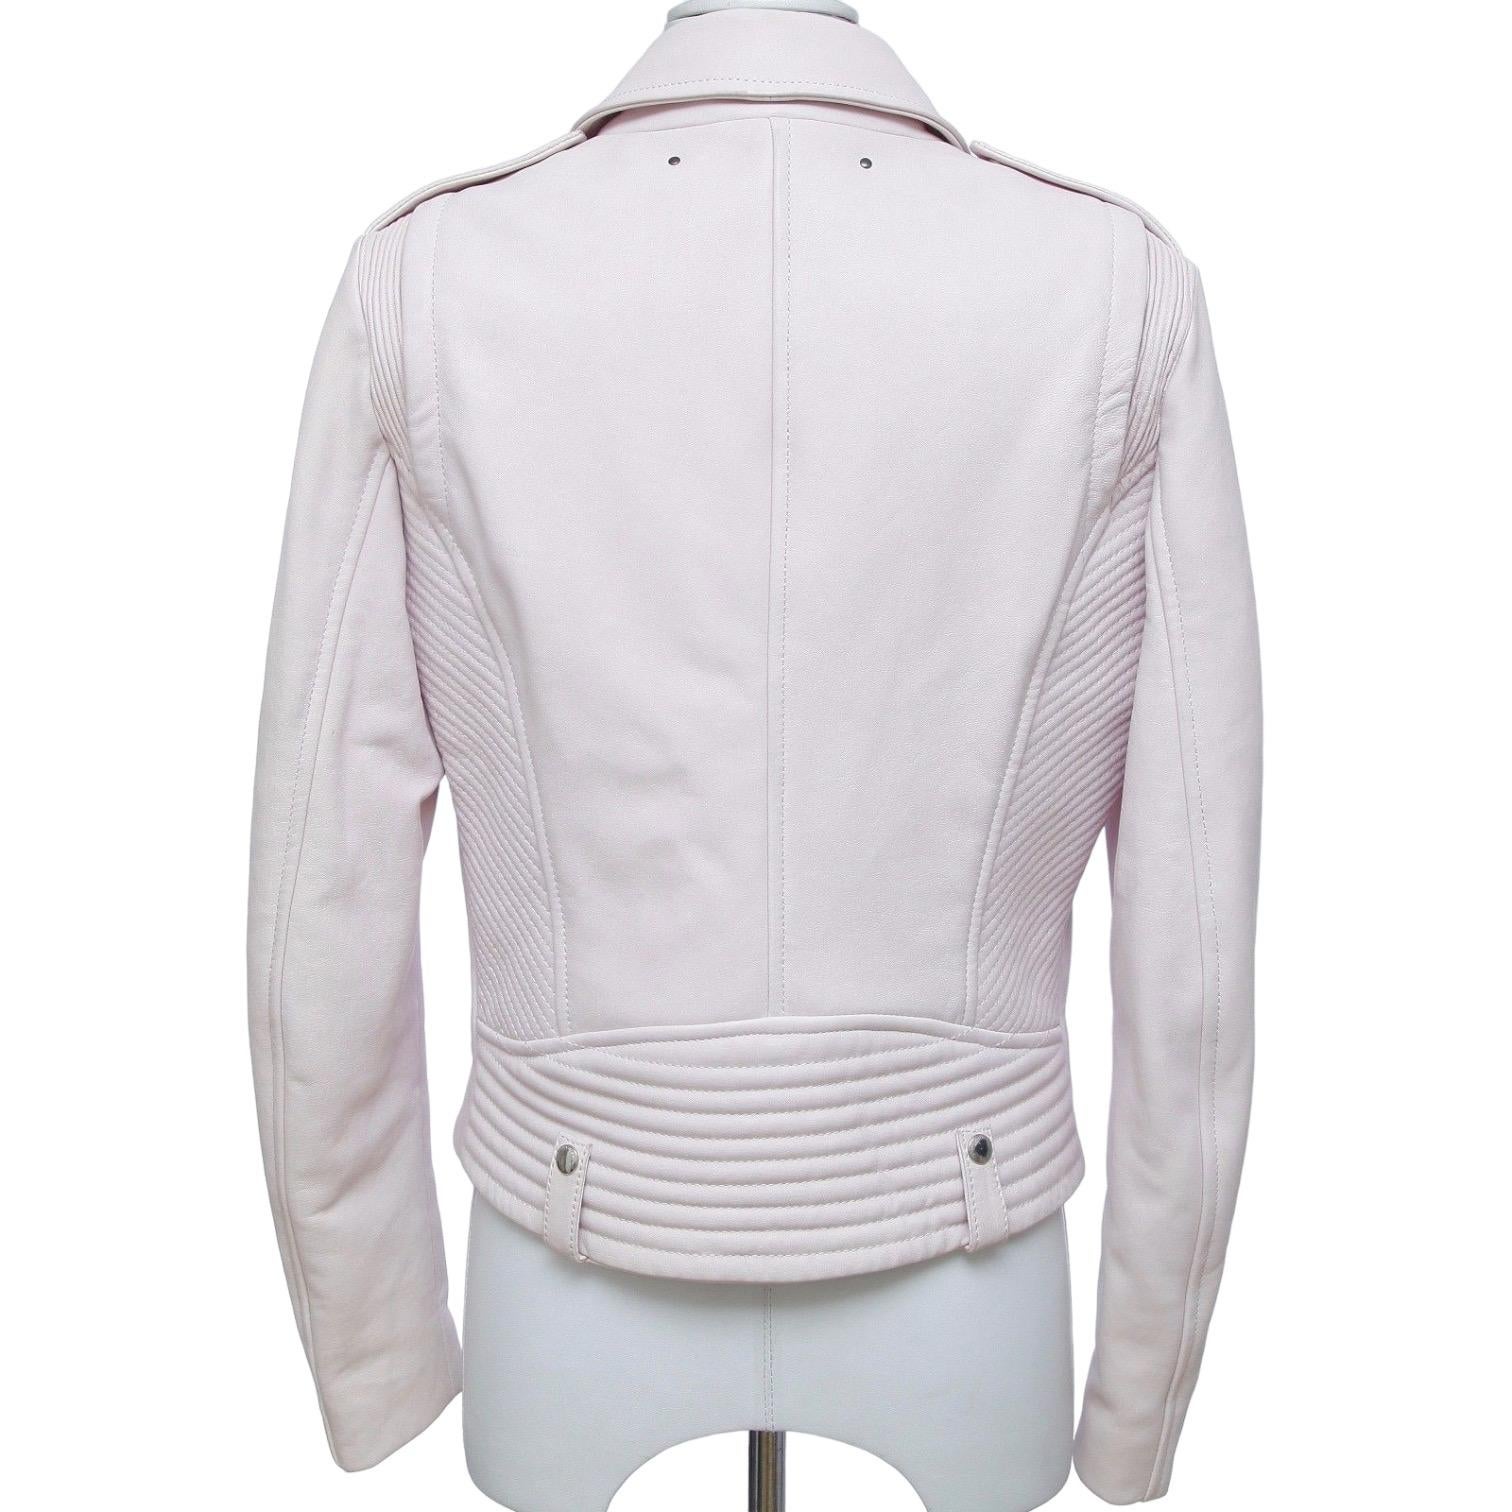 BARBARA BUI Jacket Leather Moto Coat Powder Pink Long Sleeve Zipper Sz 42 $2350 4